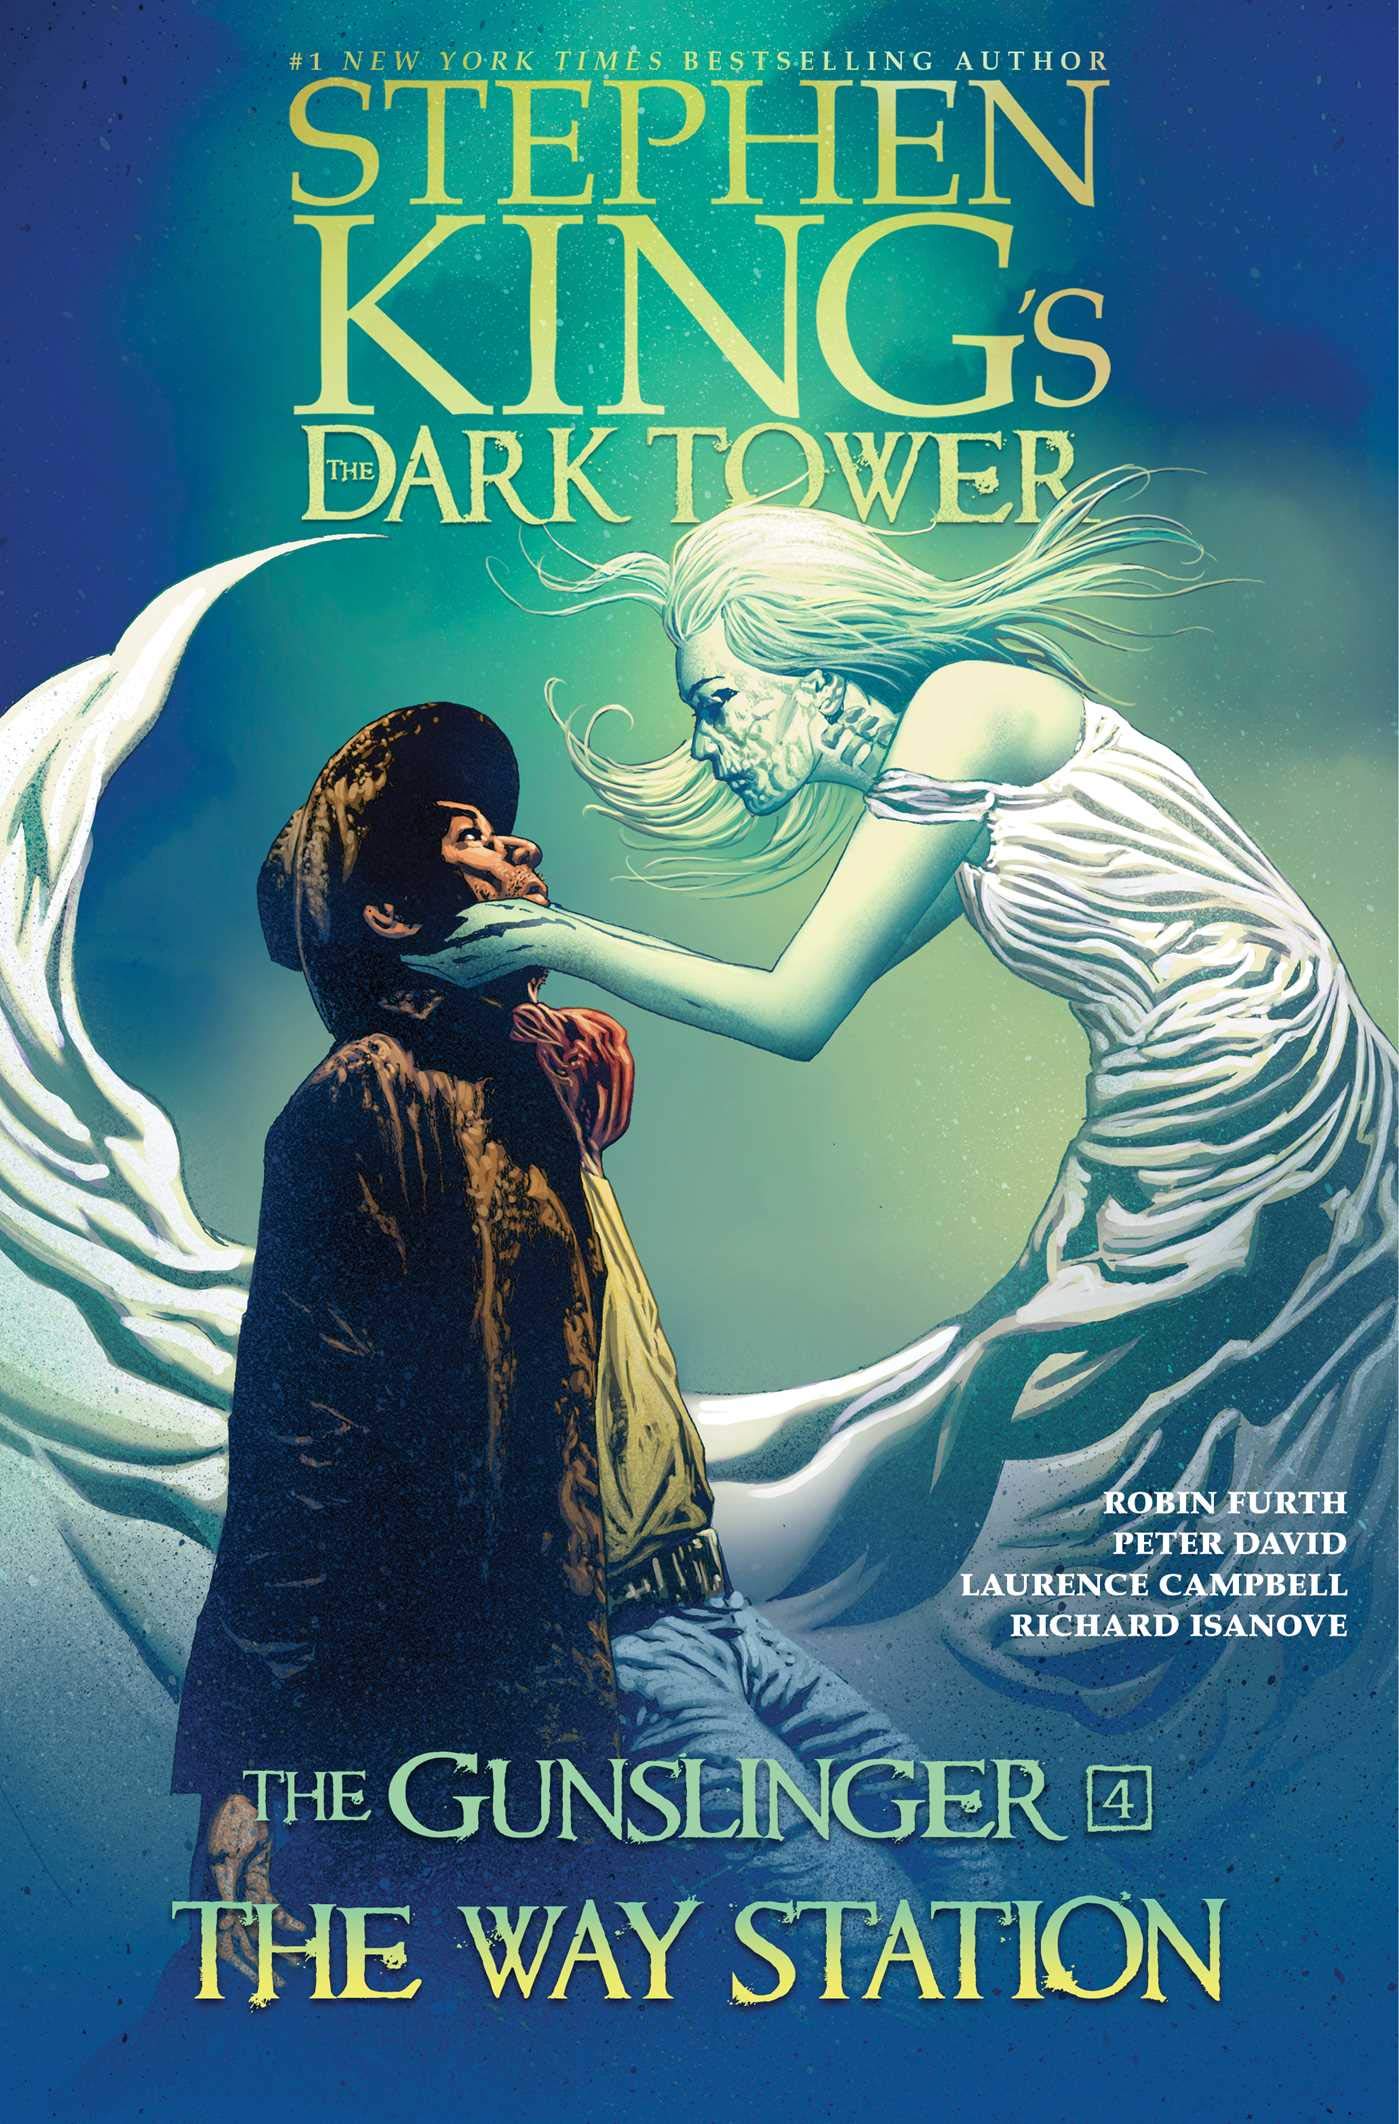 Stephen King's Dark Tower series